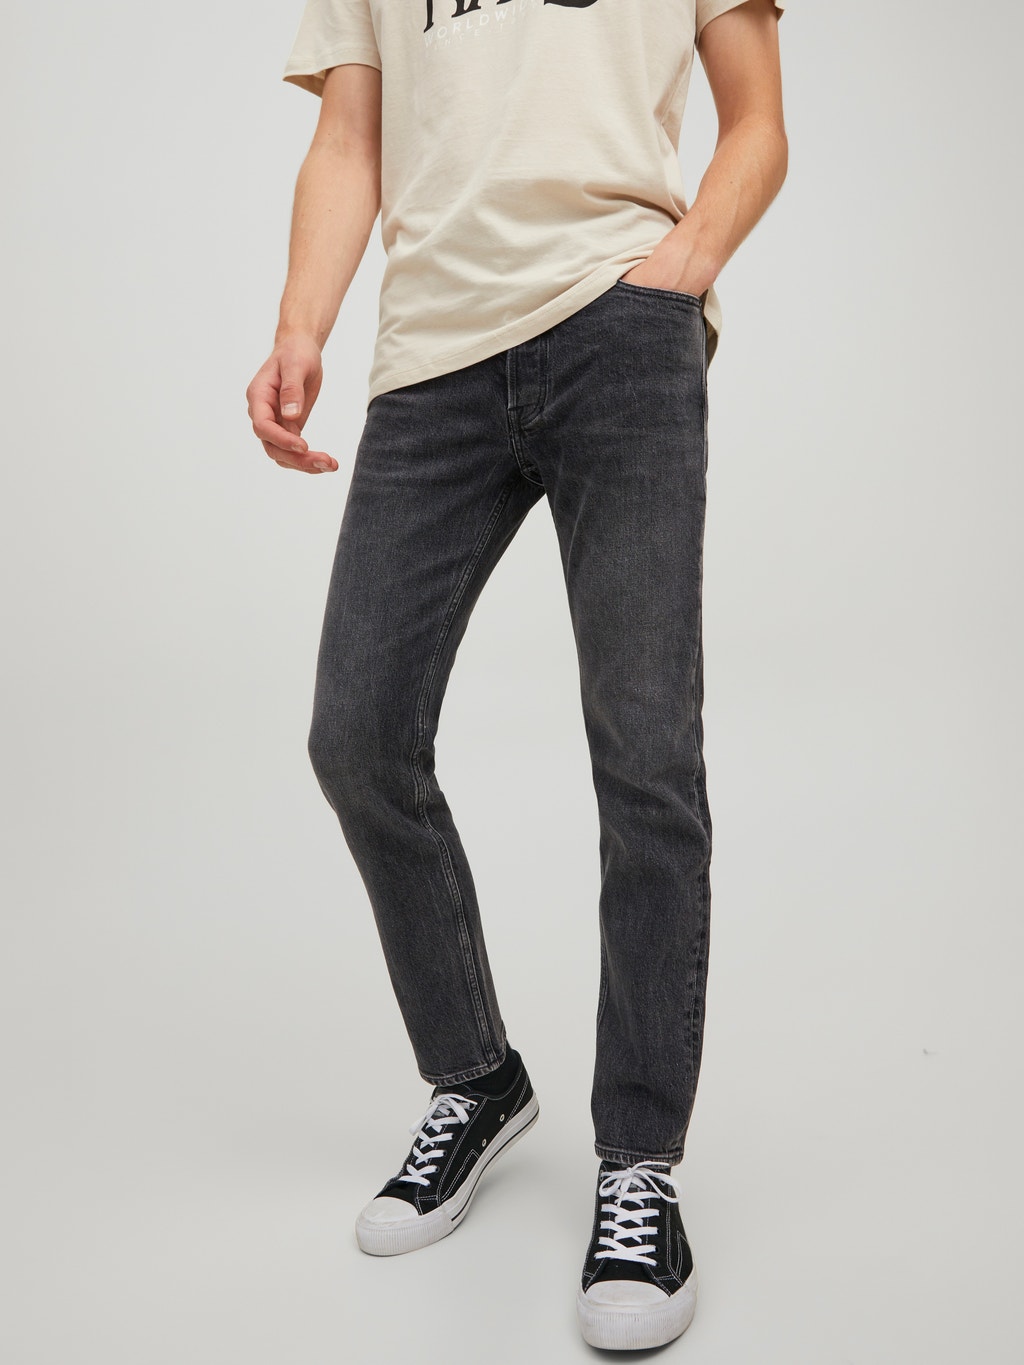 CJ 915 Slim/straight fit jeans | Black | Jack & Jones®